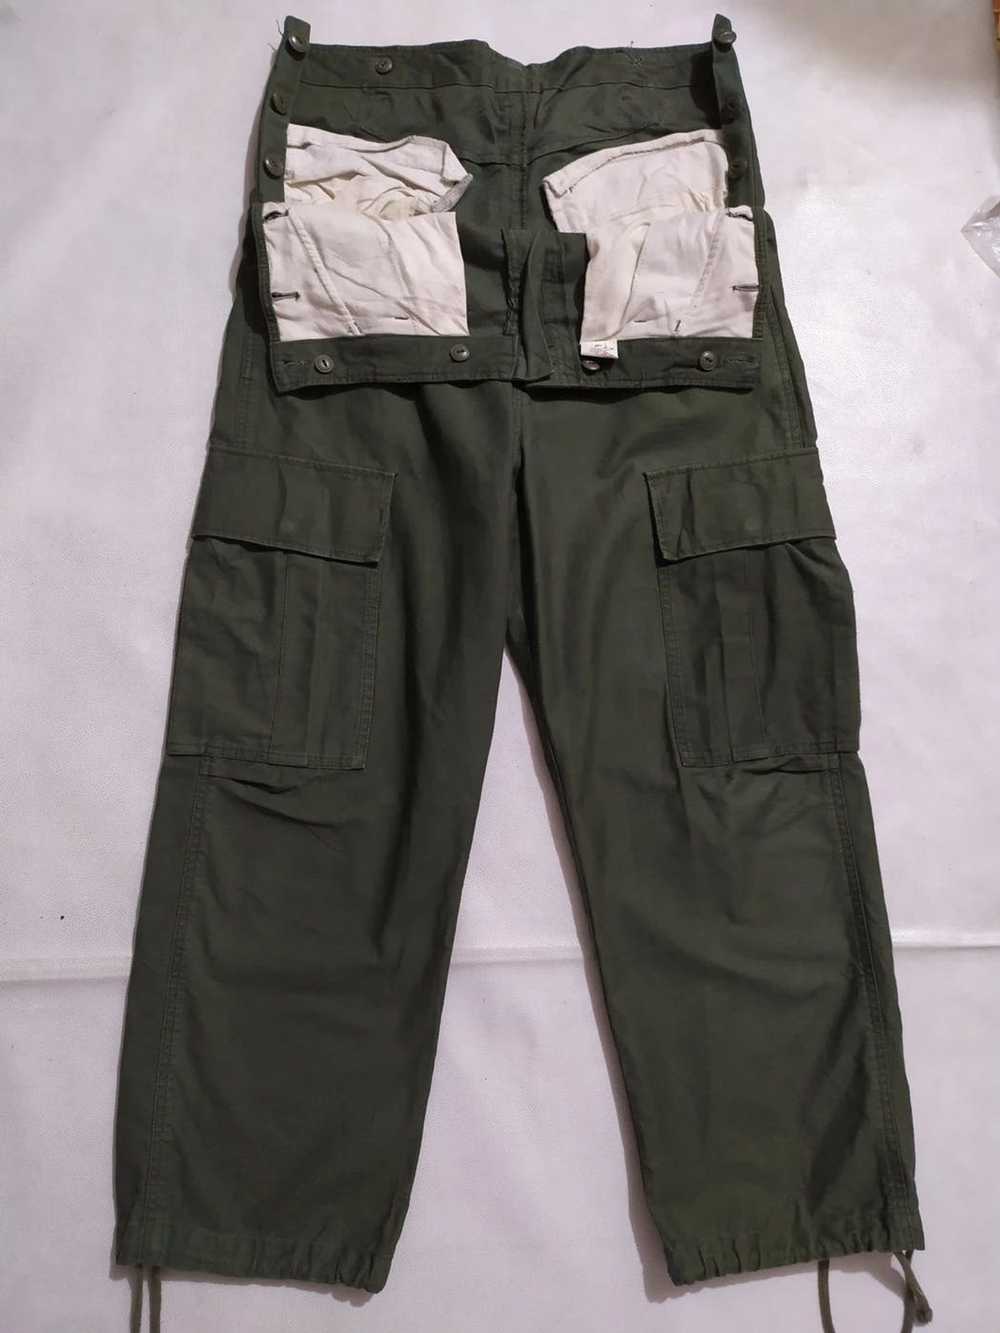 Japanese Brand Cargo Pants - image 5